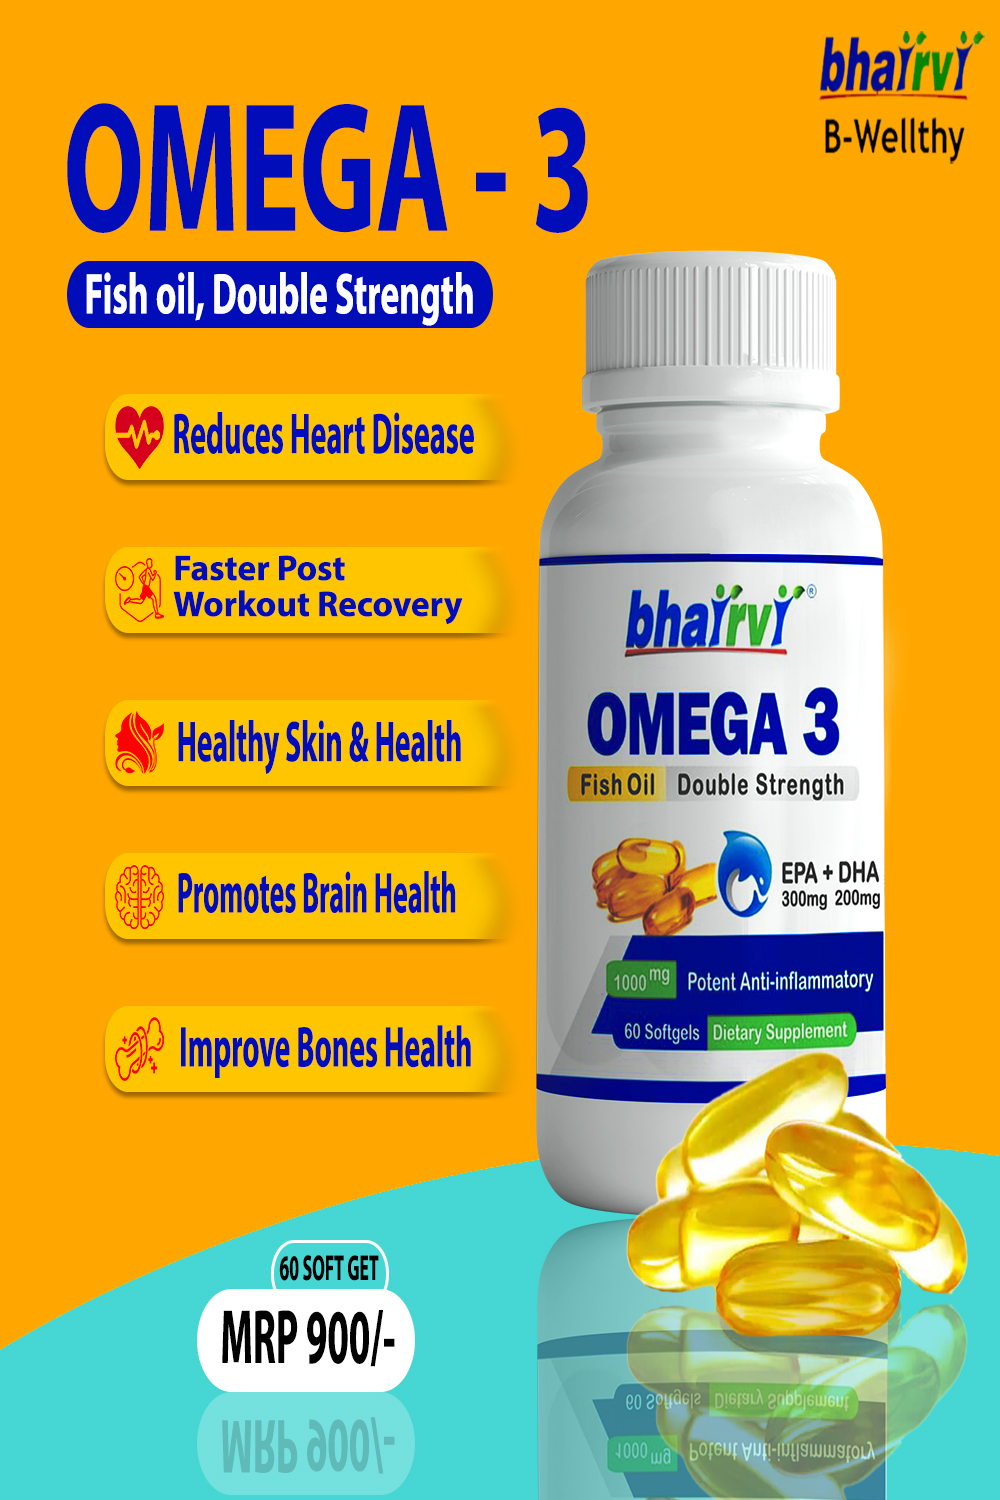 Omega - 3 Vitamin D pinterest preview image.